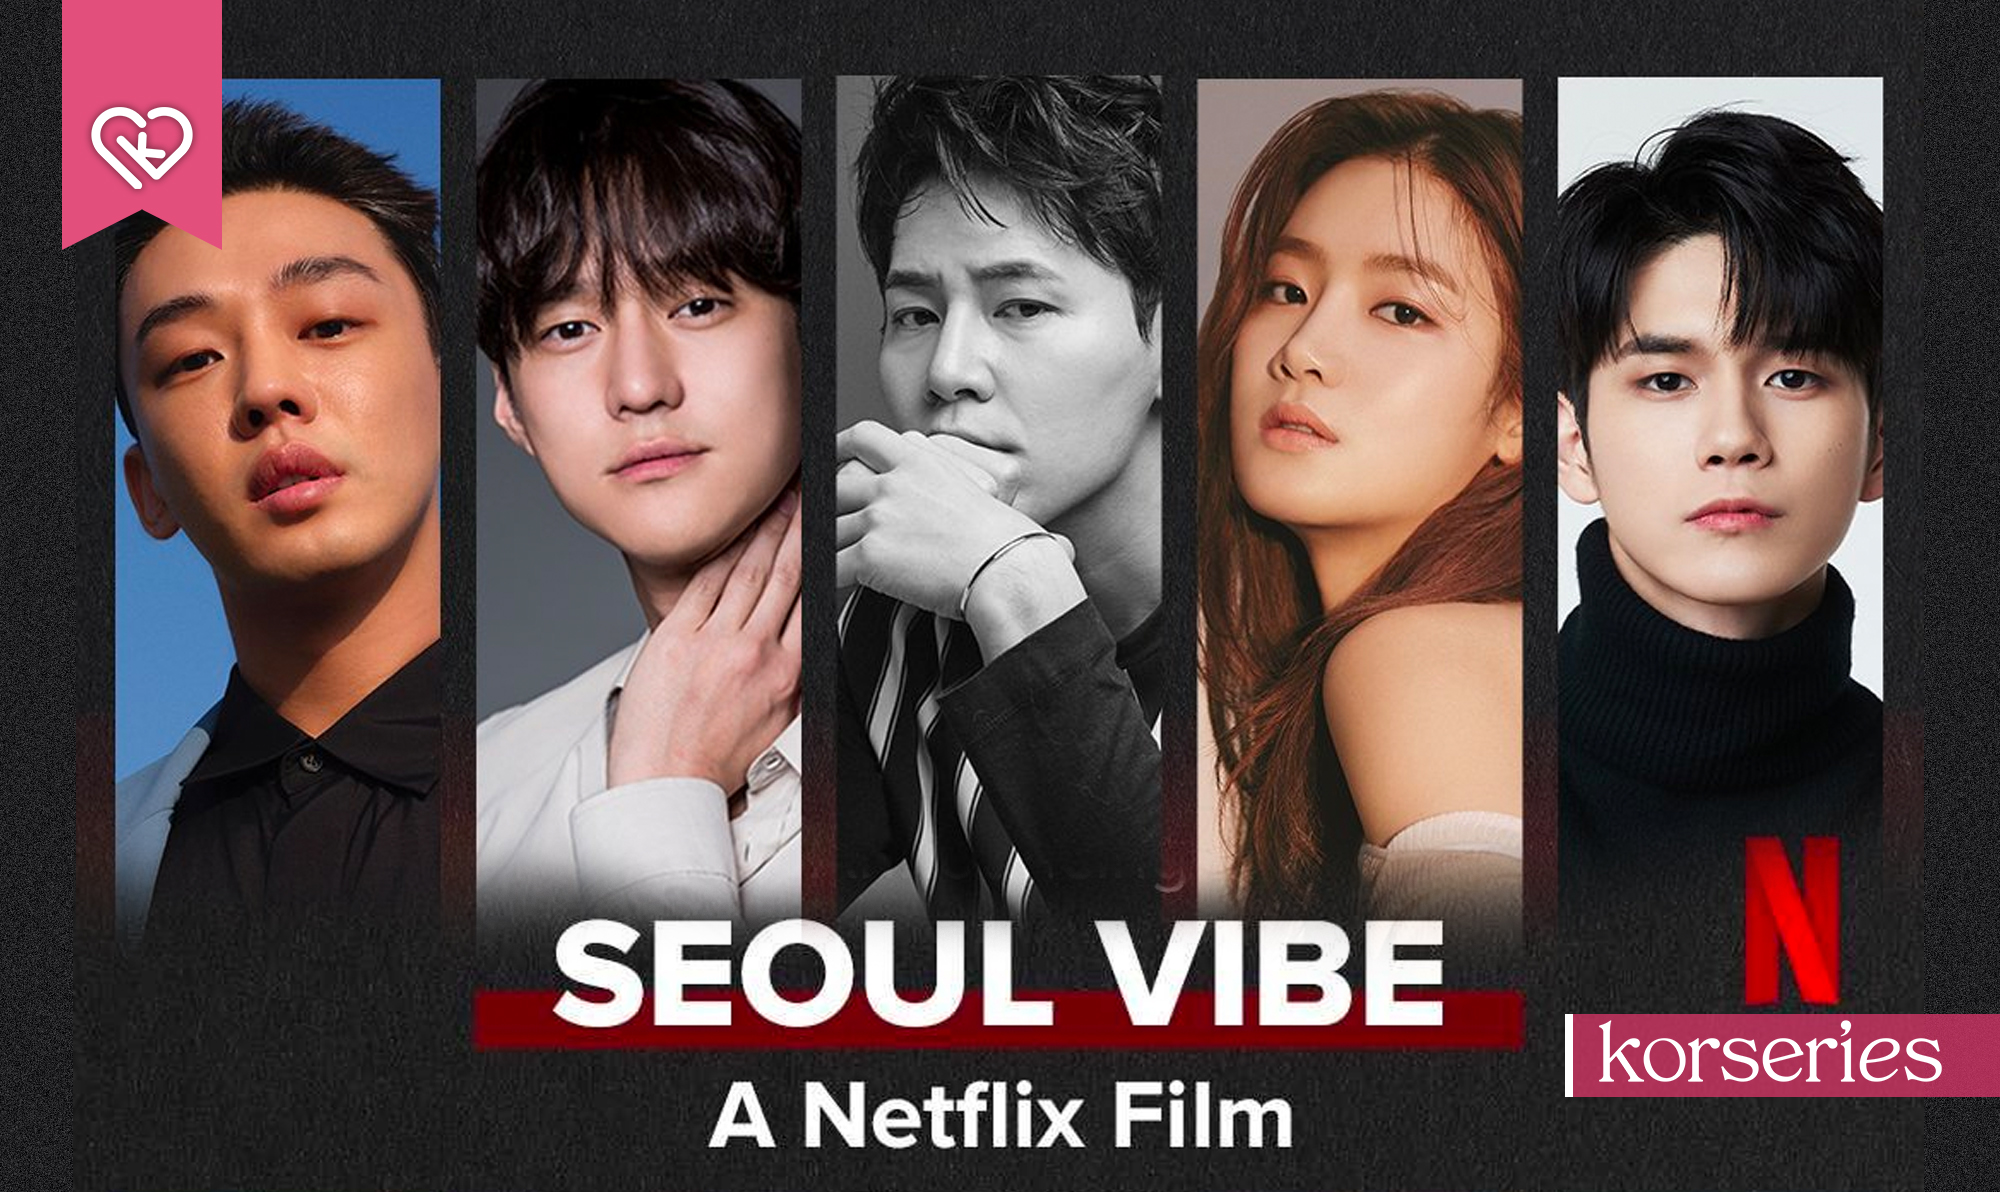 Seoul Vibe ภาพยนตร์ใหม่ Netflix เปิดไลน์อัปนักแสดงทรงพลัง ที่มาพร้อม